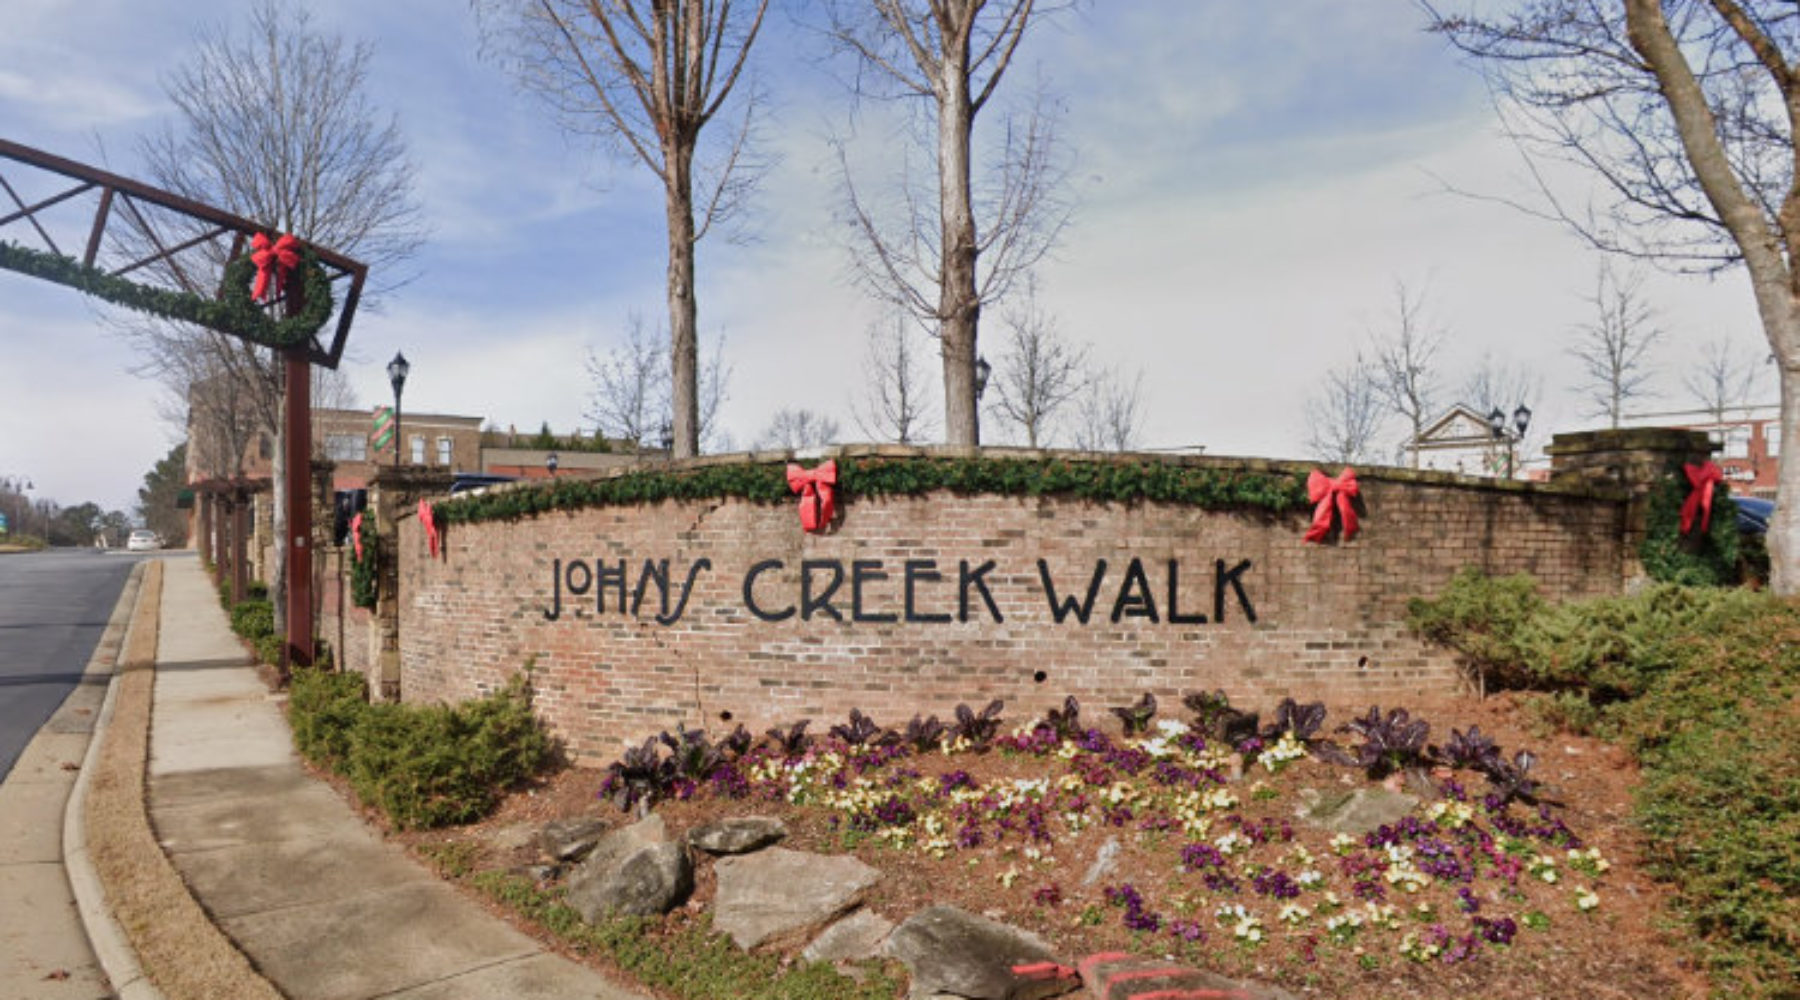 Johns Creek walk brick sign metro atlanta